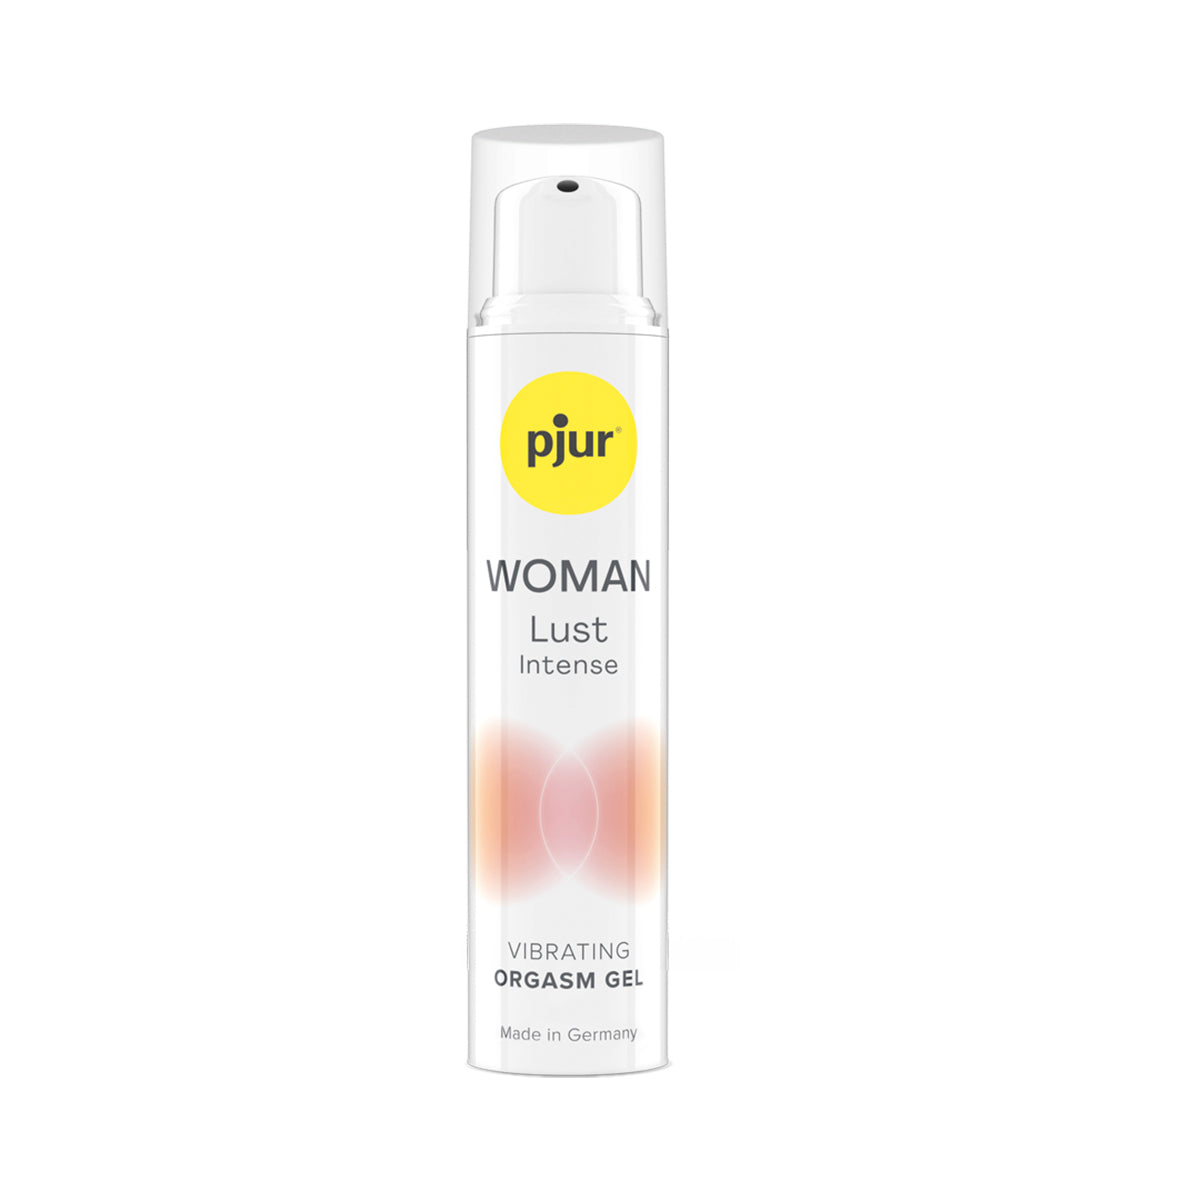 PJUR Woman Lust Intense Clitoral Stimulation Gel – 15ml